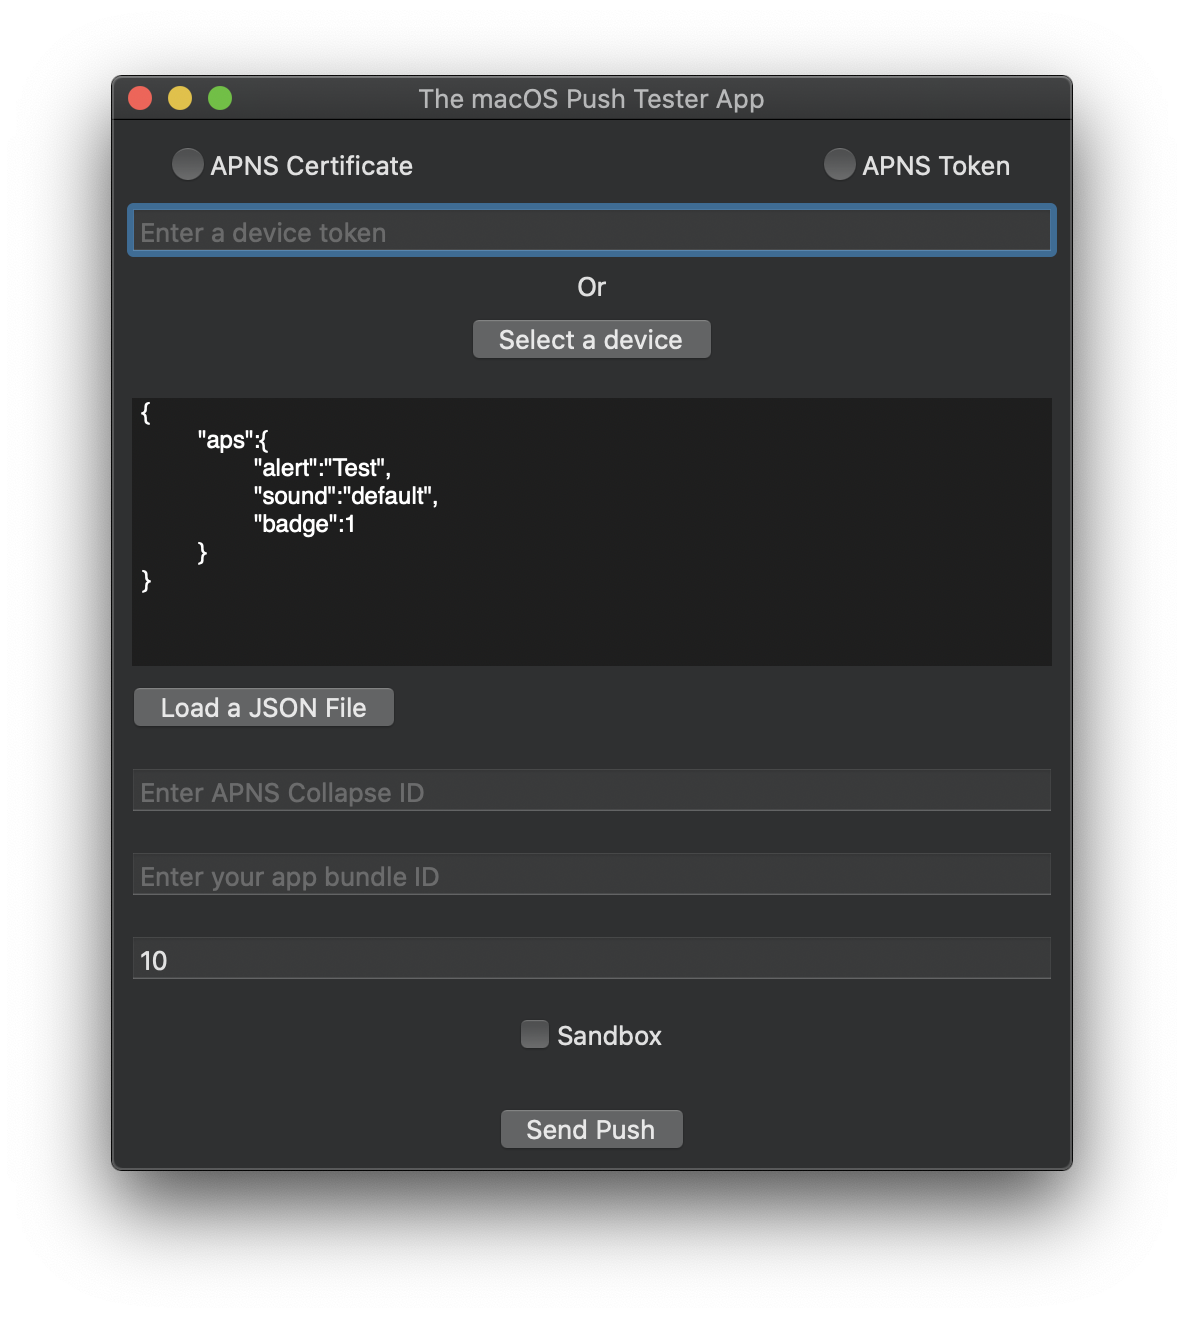 The macOS Push Tester App